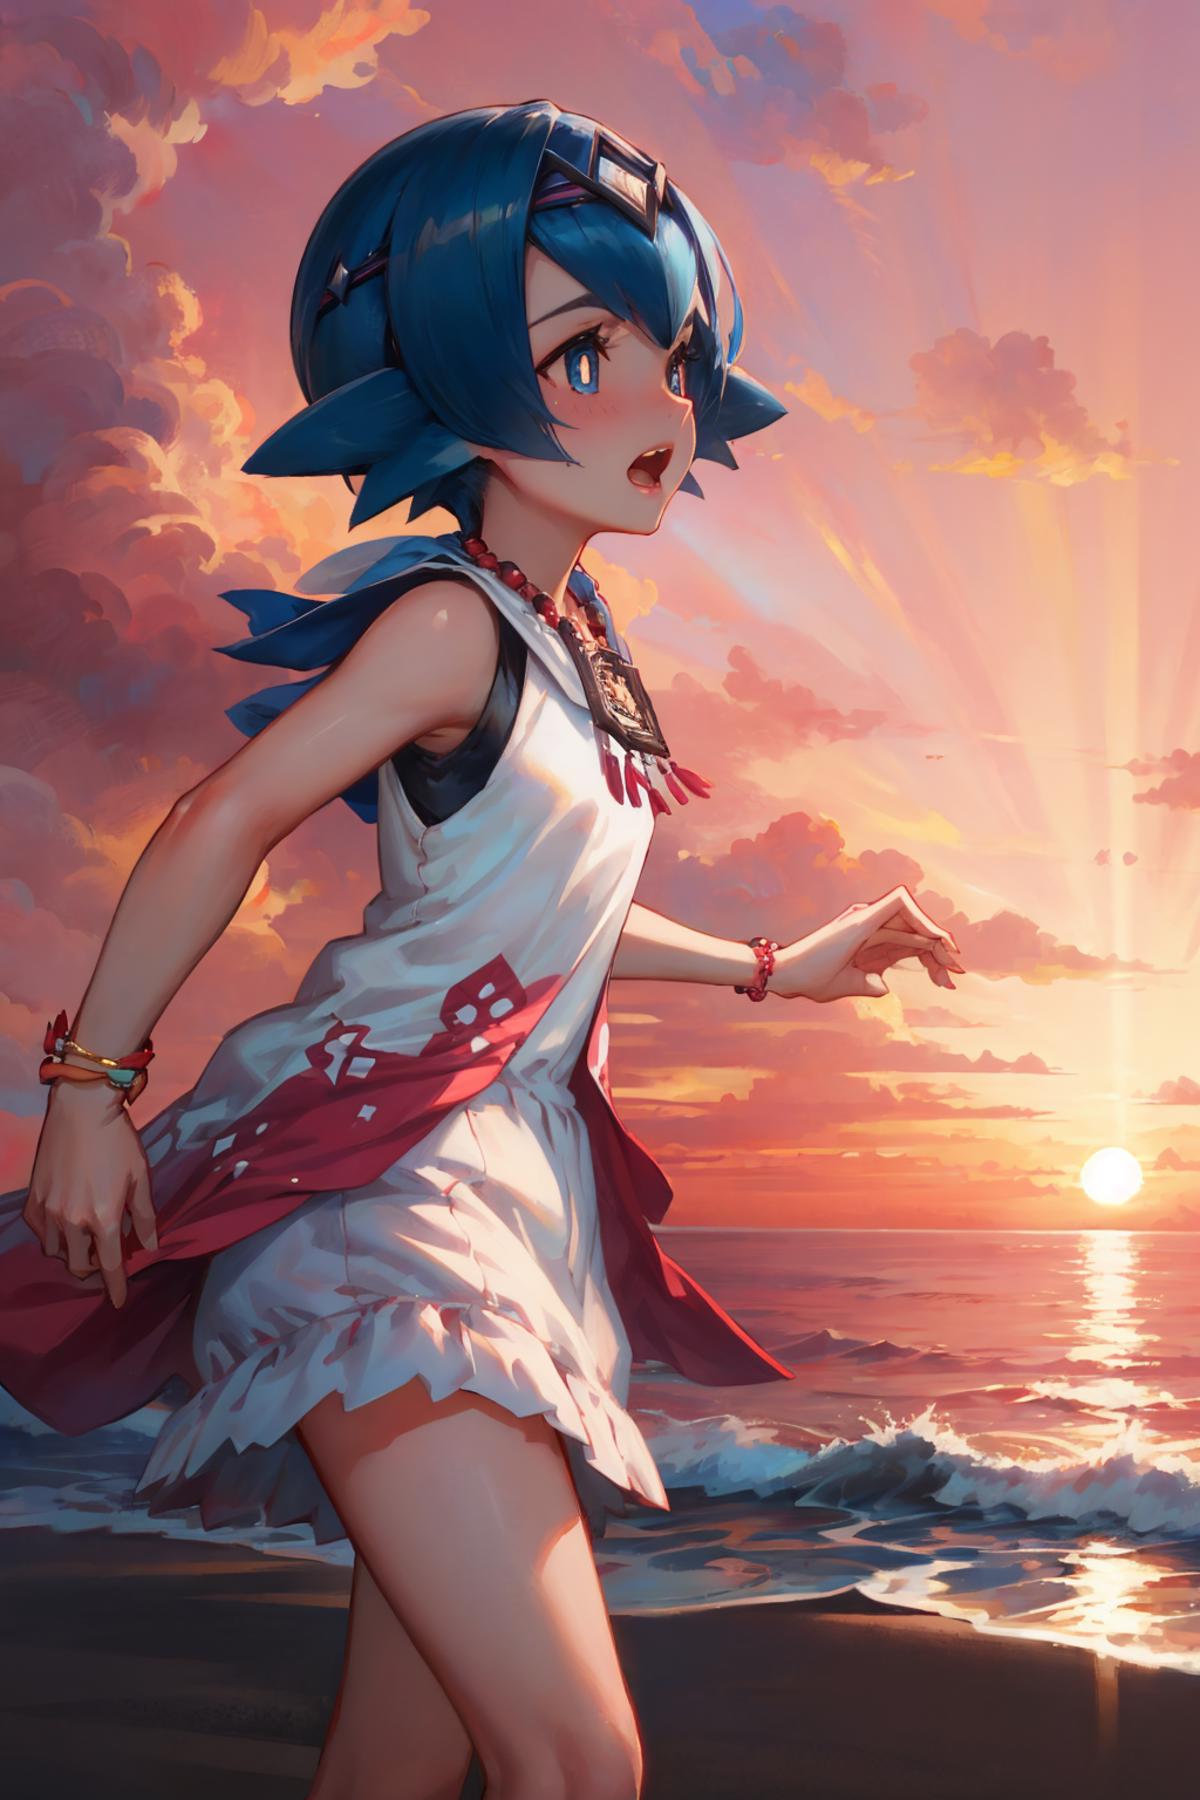 Lana/スイレン (Pokemon Sun and Moon) LoRA image by novowels